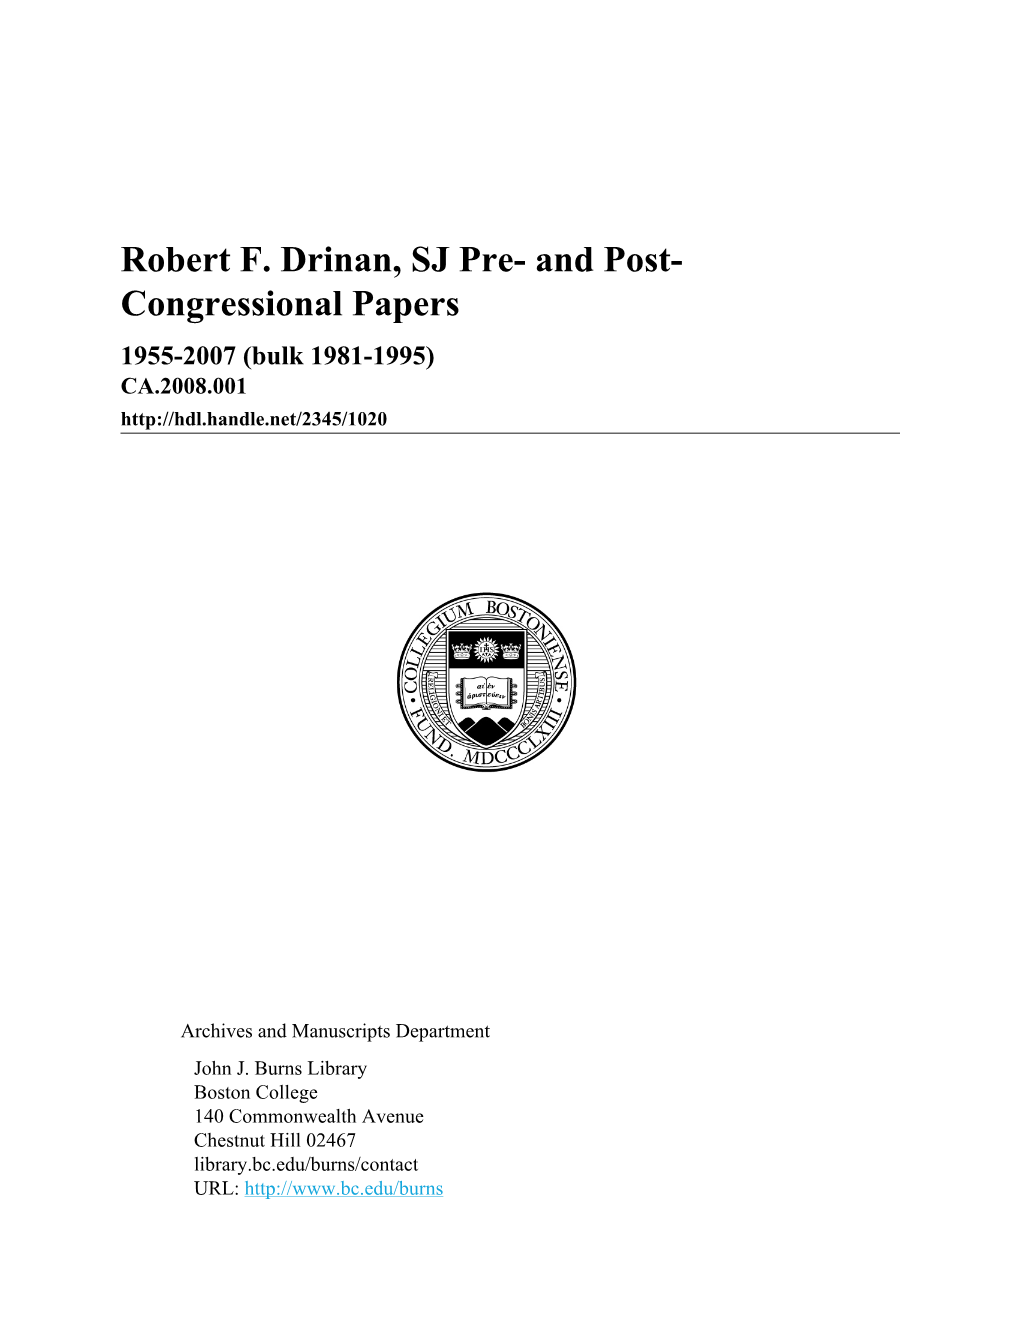 Robert F. Drinan, SJ Pre- and Post- Congressional Papers 1955-2007 (Bulk 1981-1995) CA.2008.001